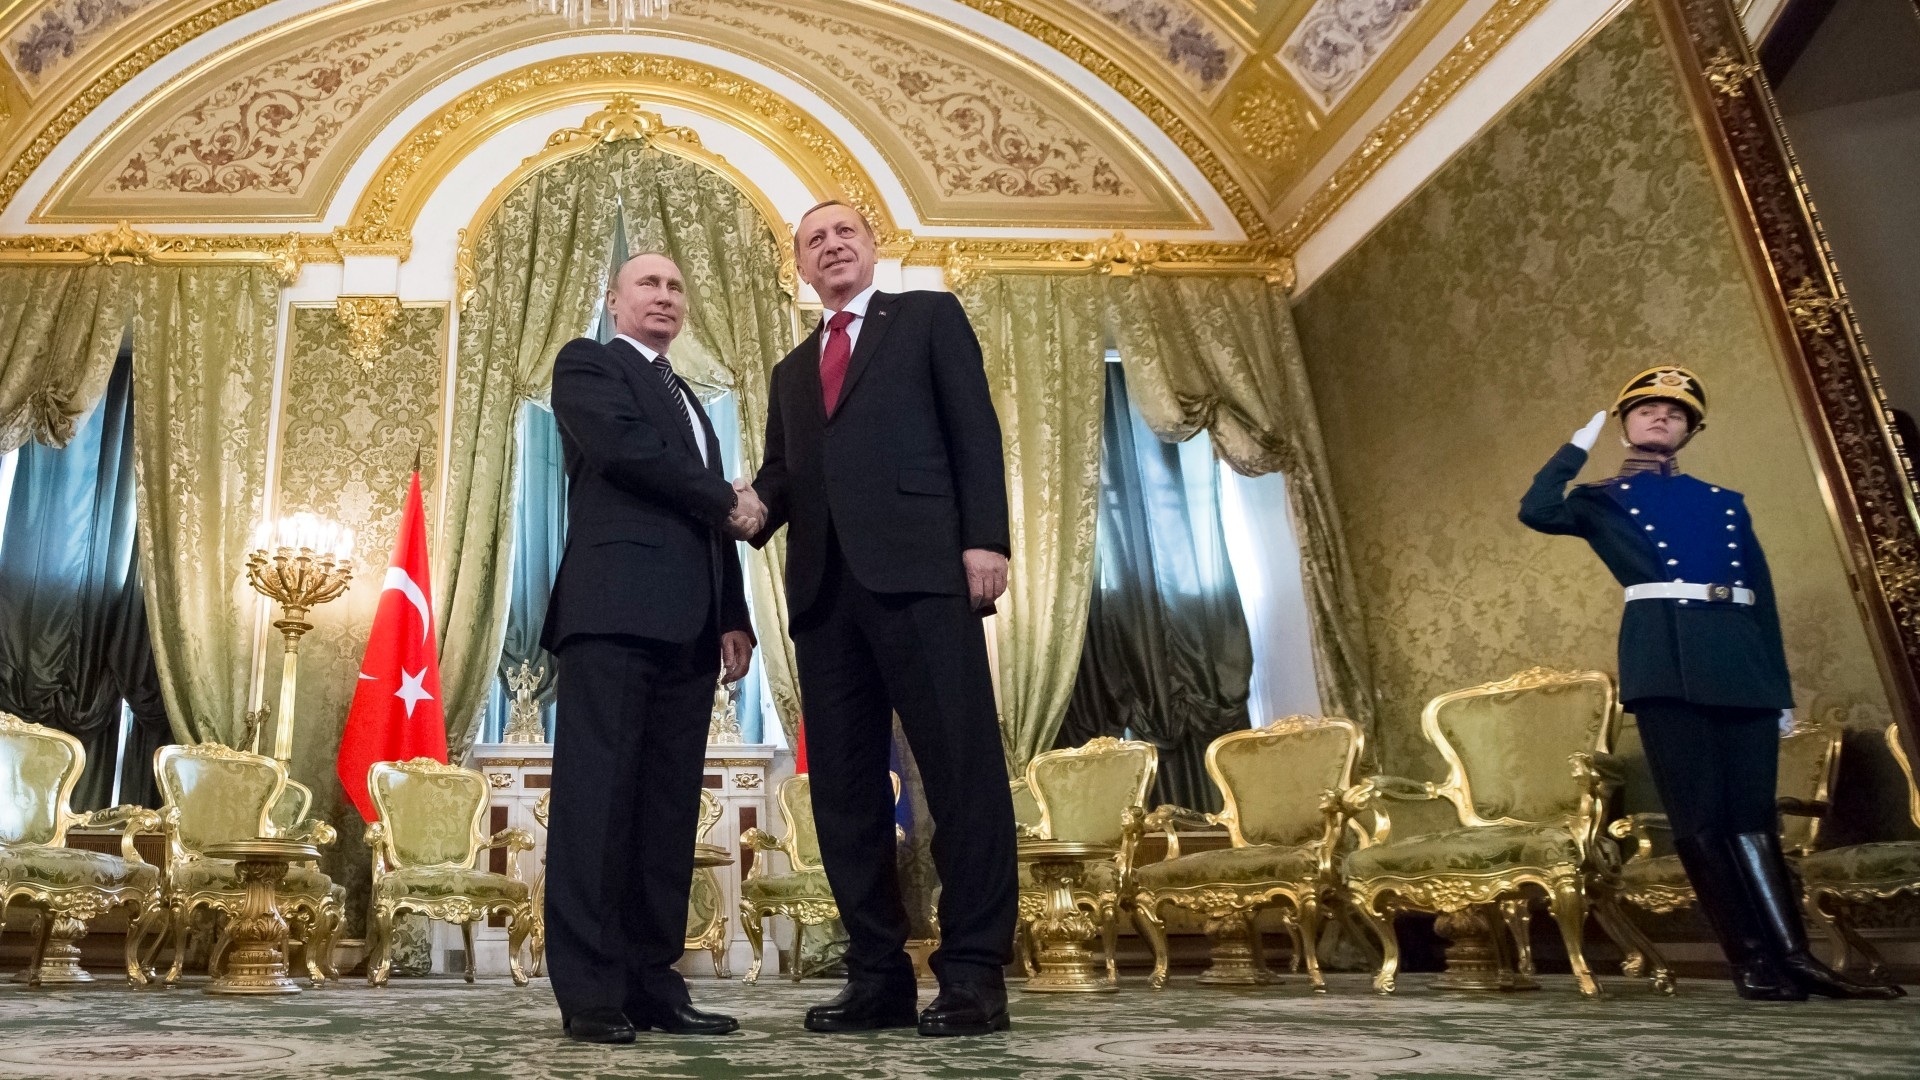 Russian President Vladimir Putin, left, shakes hands with Turkey's President Recep Tayyip Erdogan during their meeting in the Kremlin in Moscow in 2017 (AP)